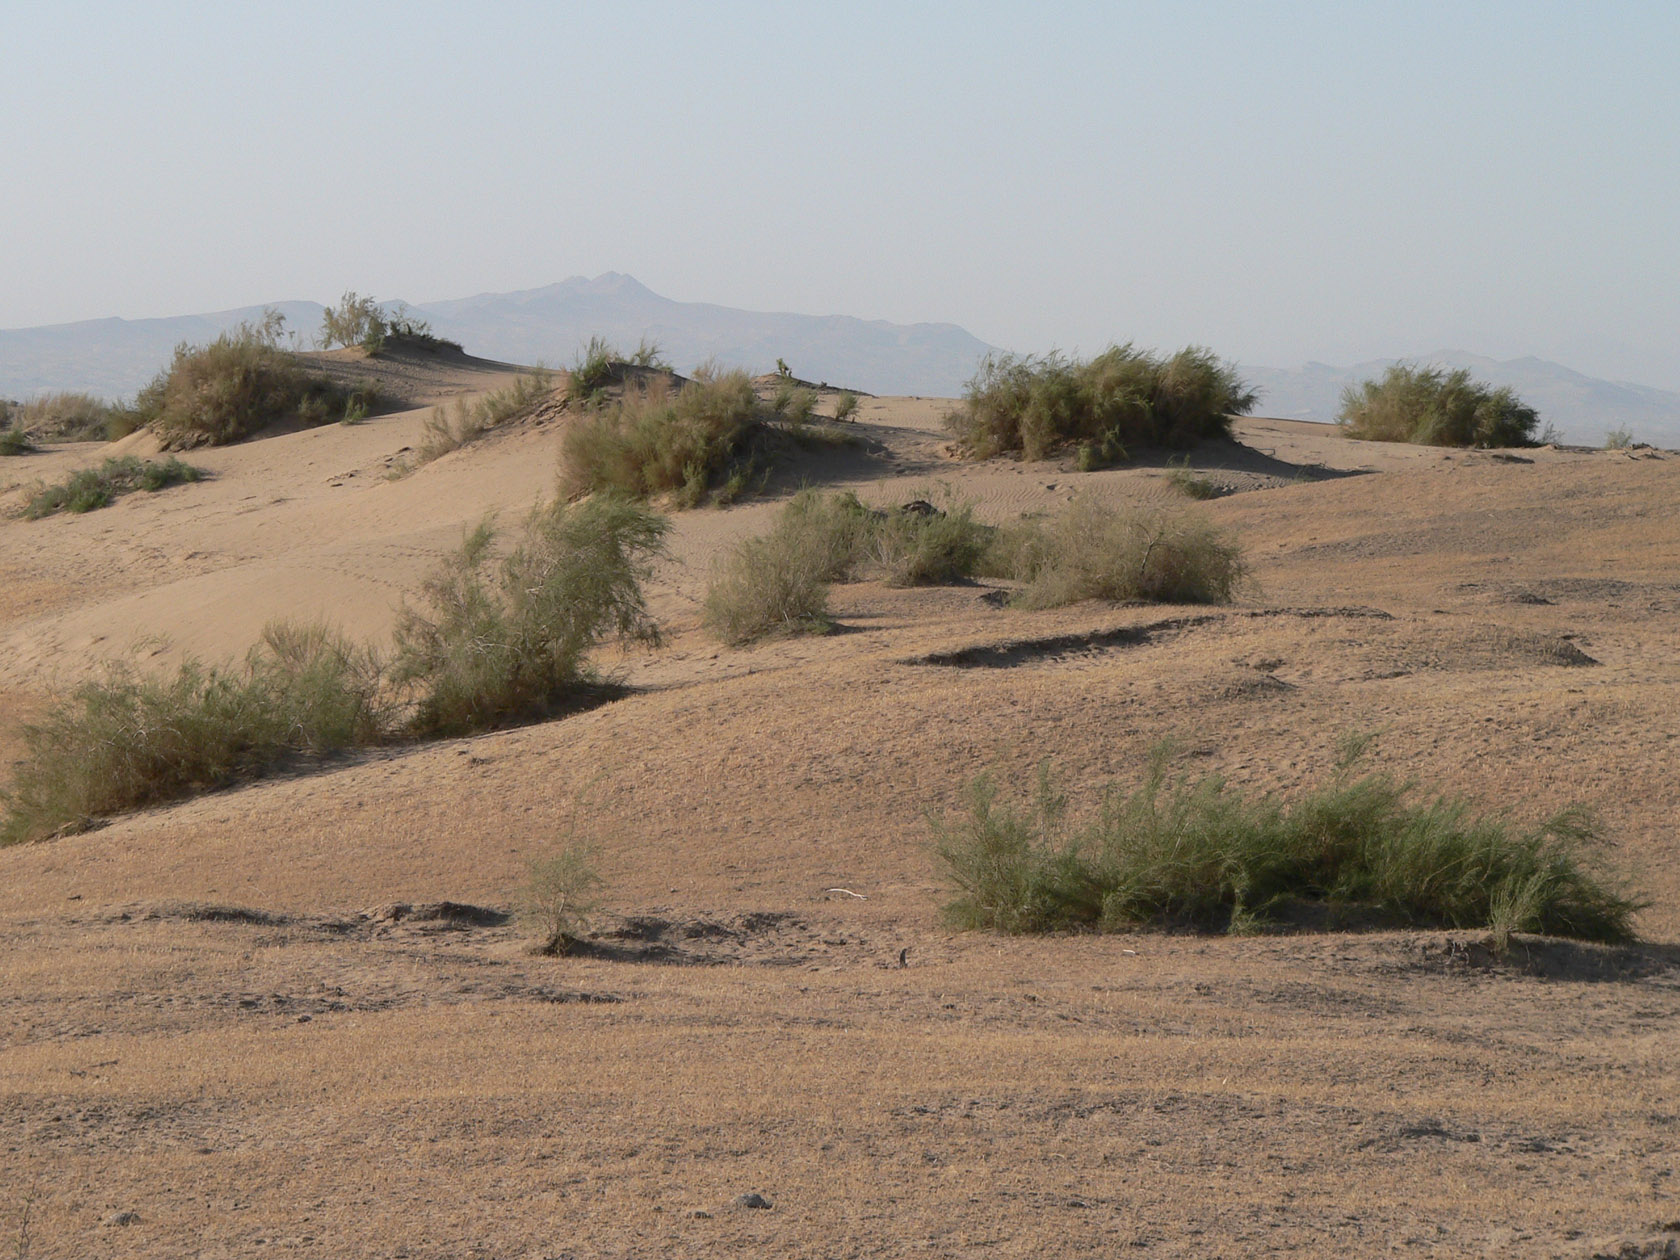 Курджалакум, image of landscape/habitat.